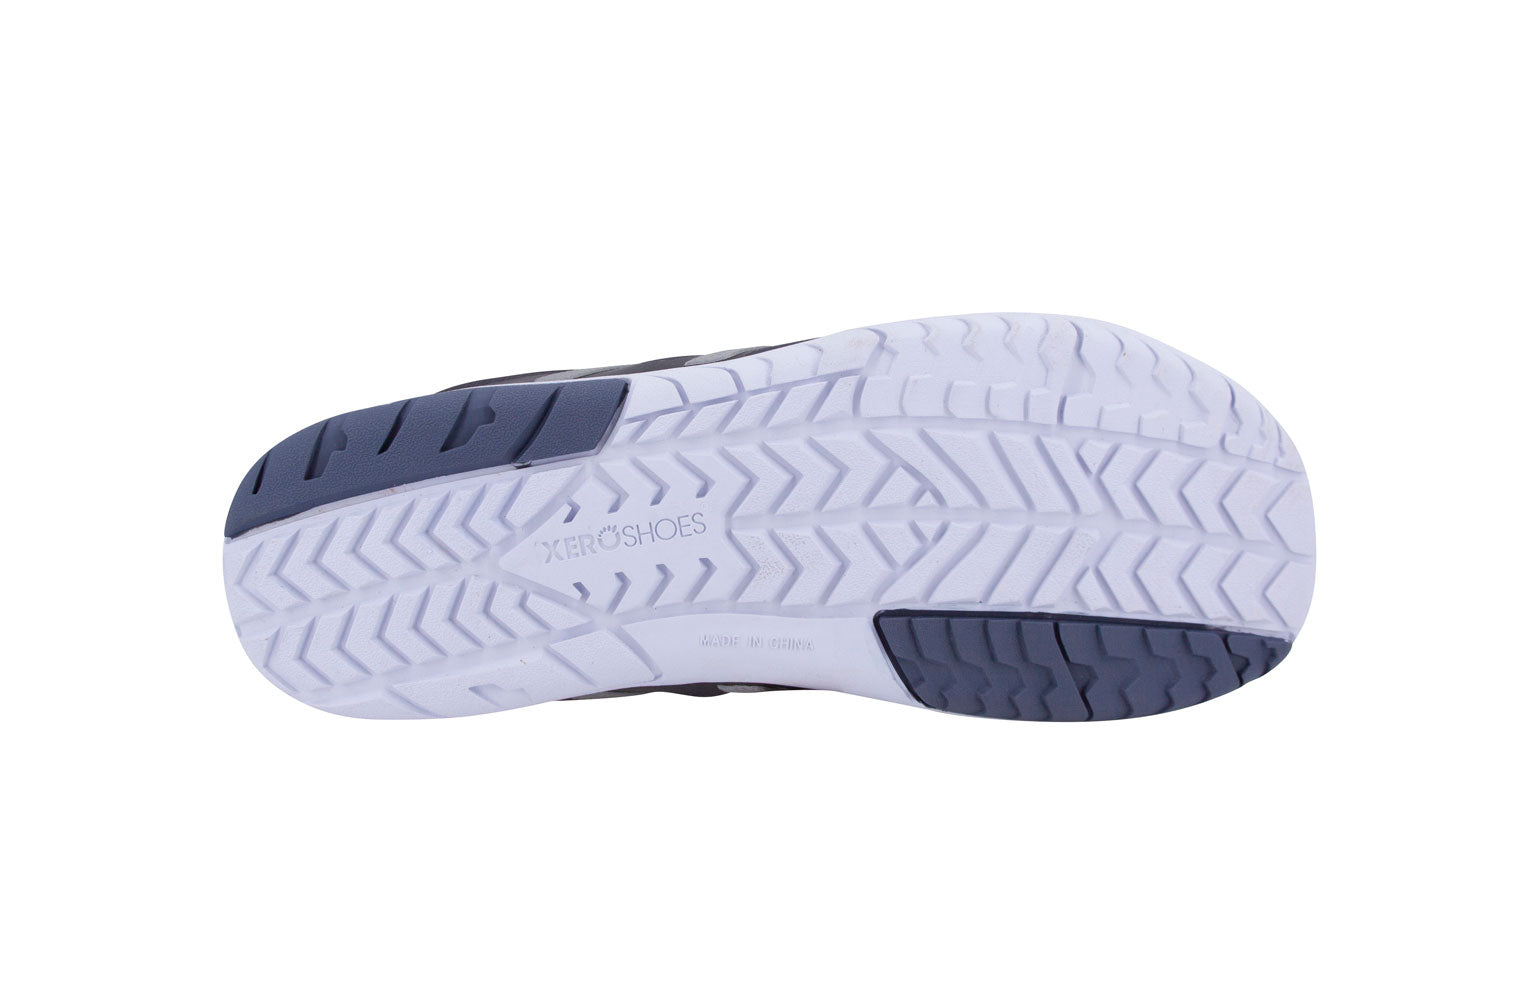 Xero Shoes HFS Womens barfods træningssko/løbesko til kvinder i farven steel gray, saal